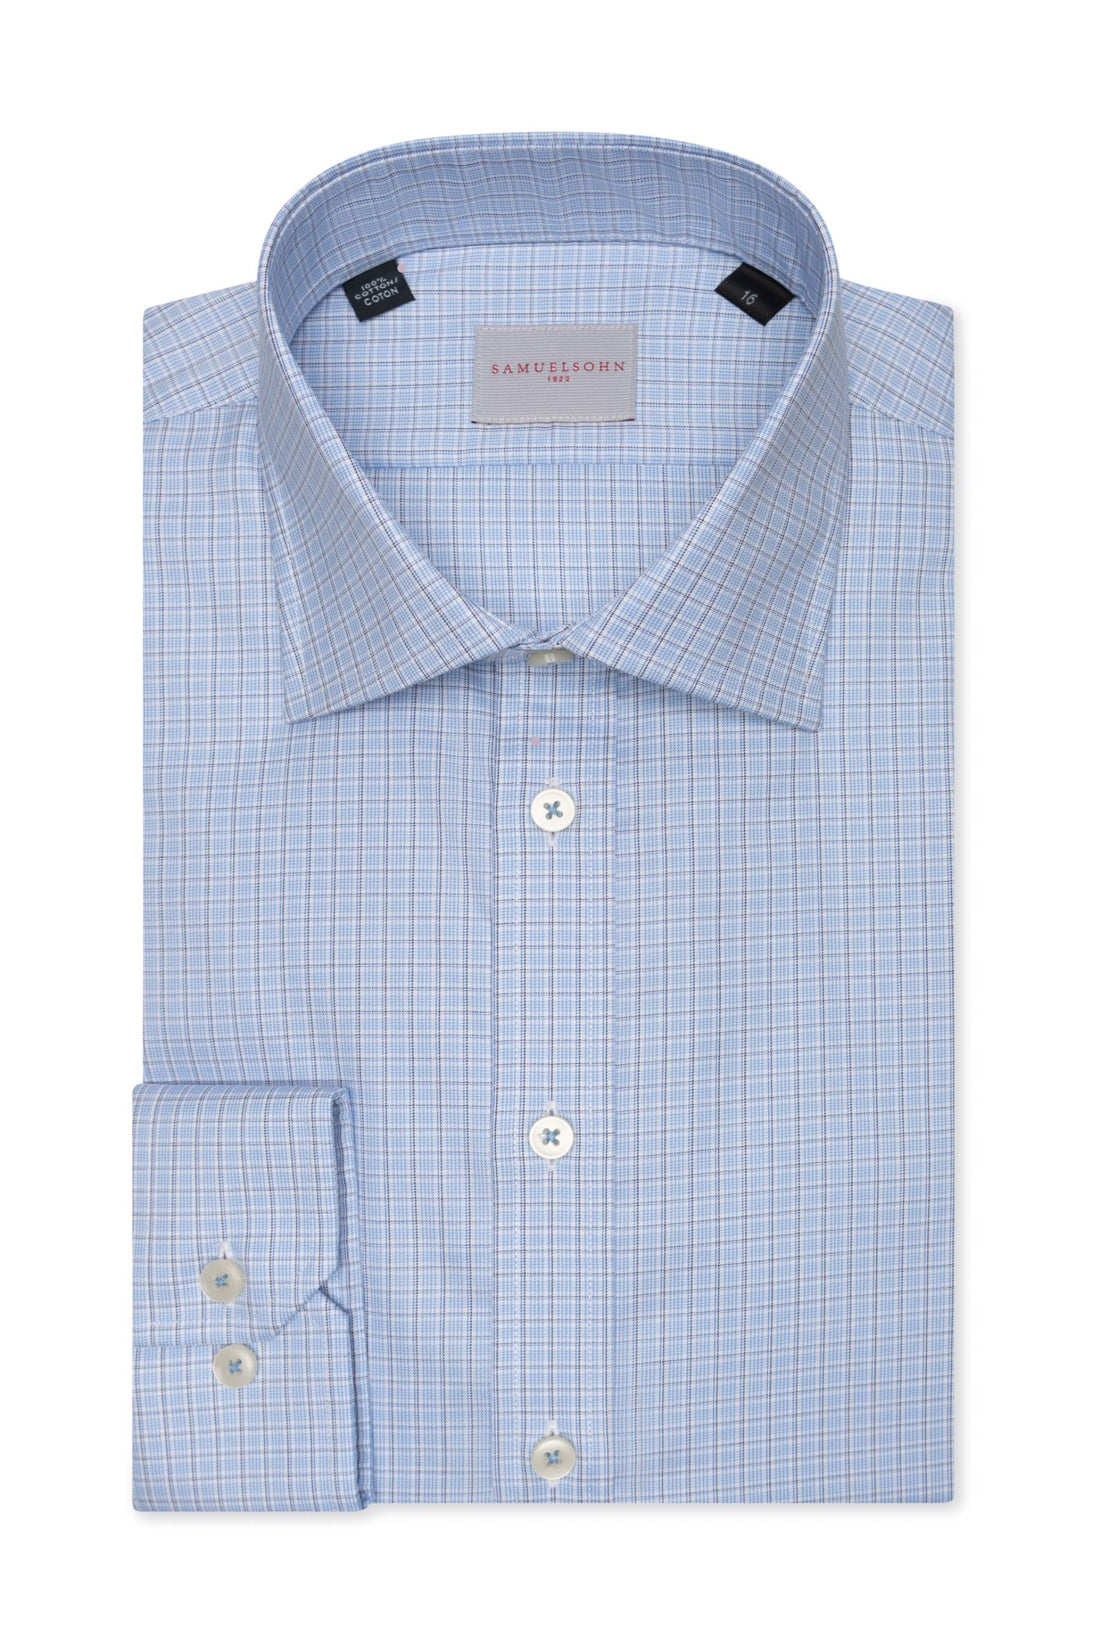 Samuelsohn Blue Herringbone Check Contemporary Fit Easy Care Shirt